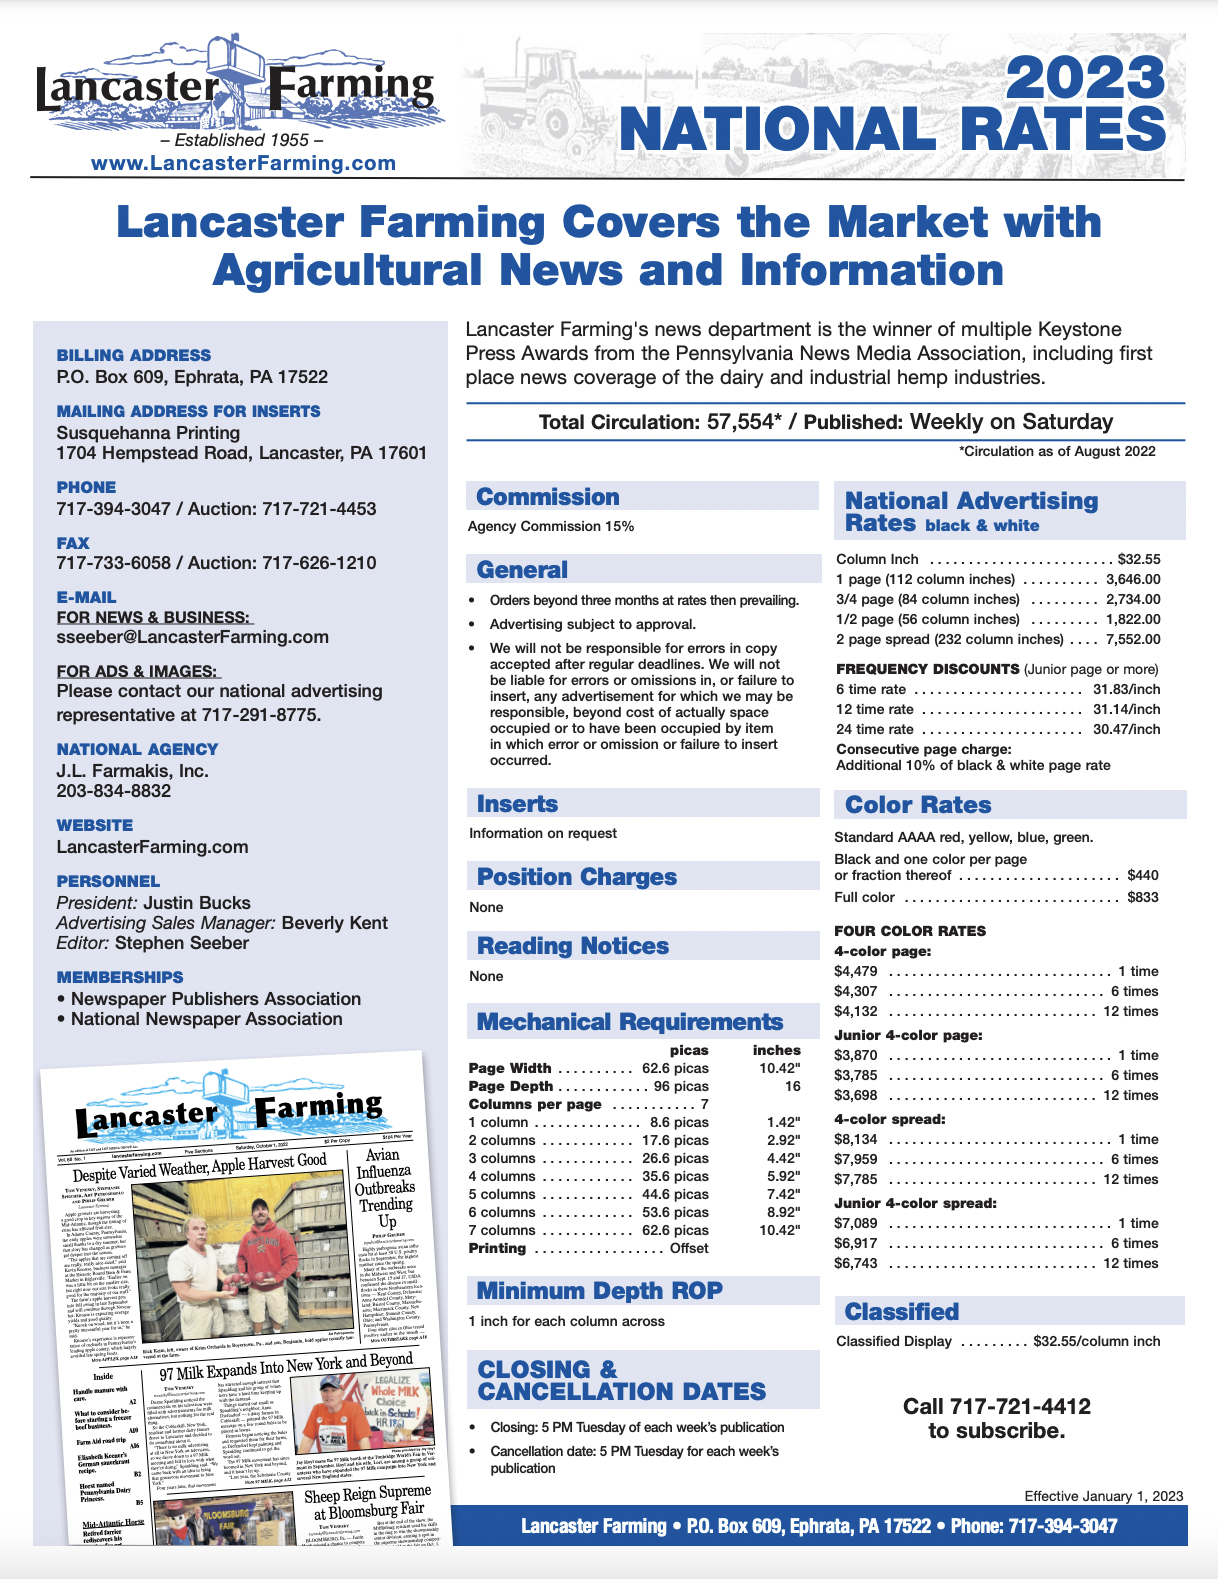 Lancaster Farming National Rates